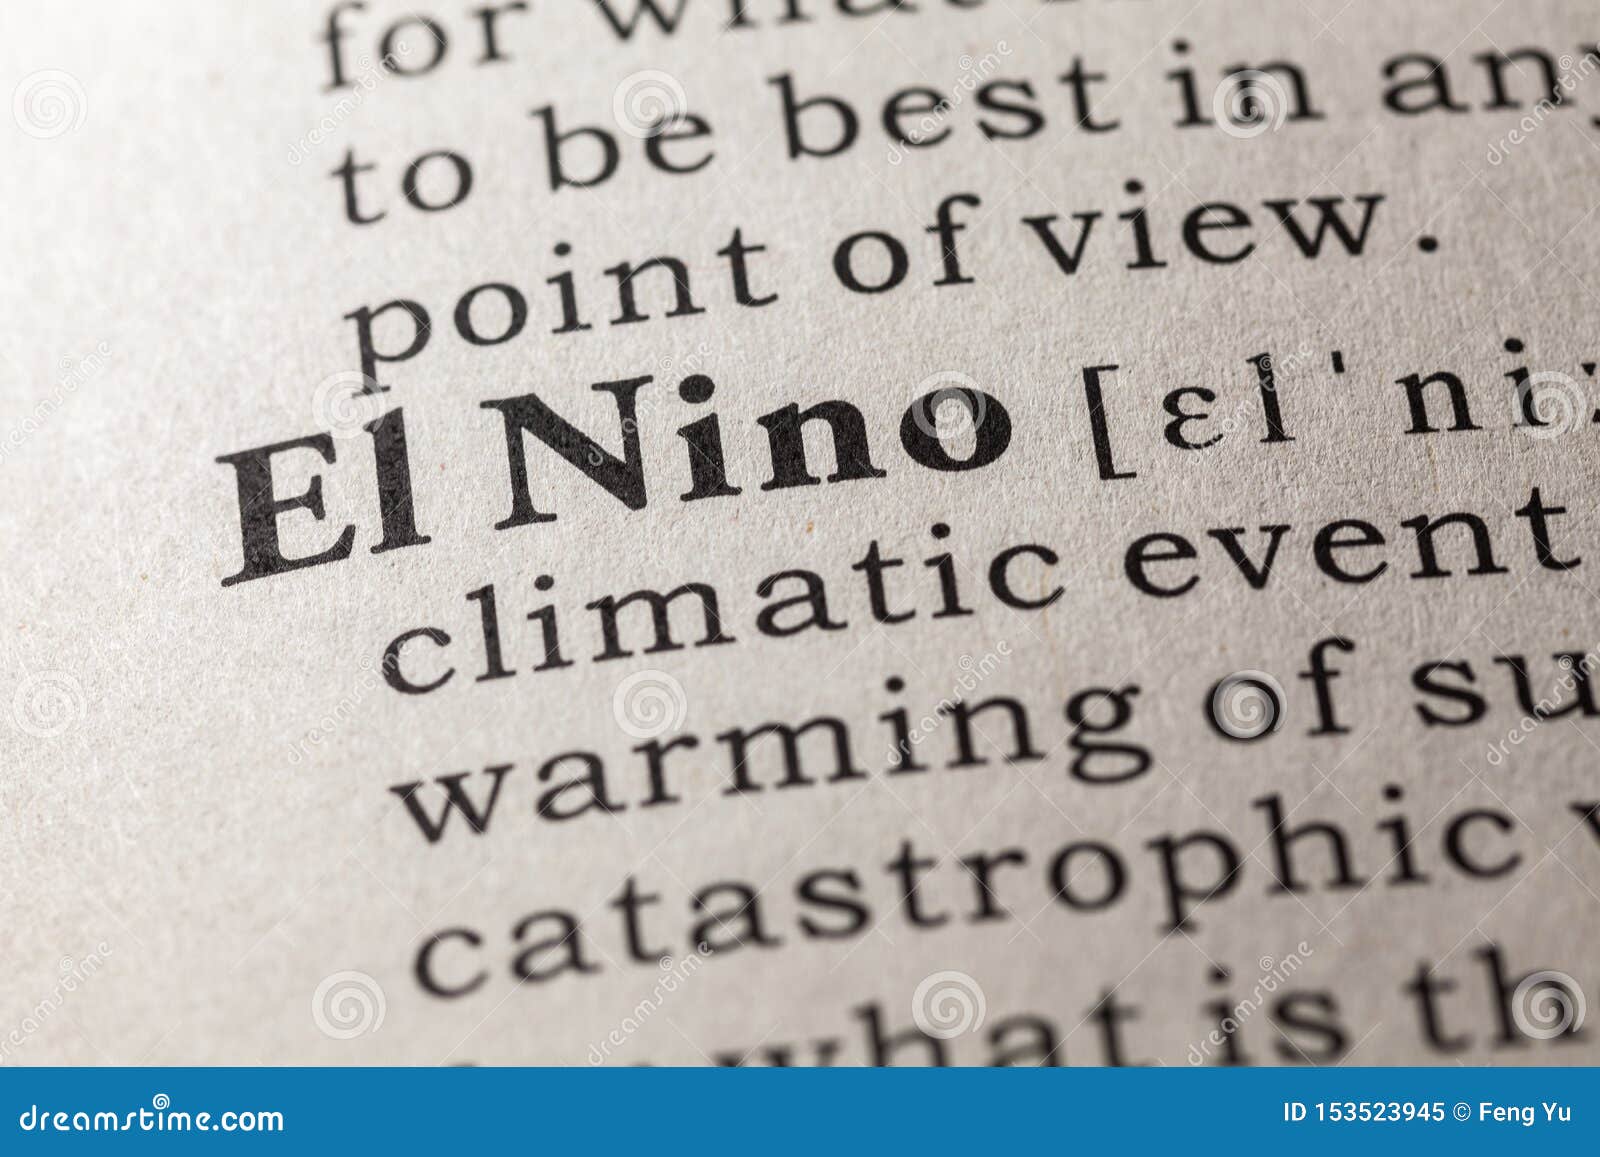 definition of the word el nino